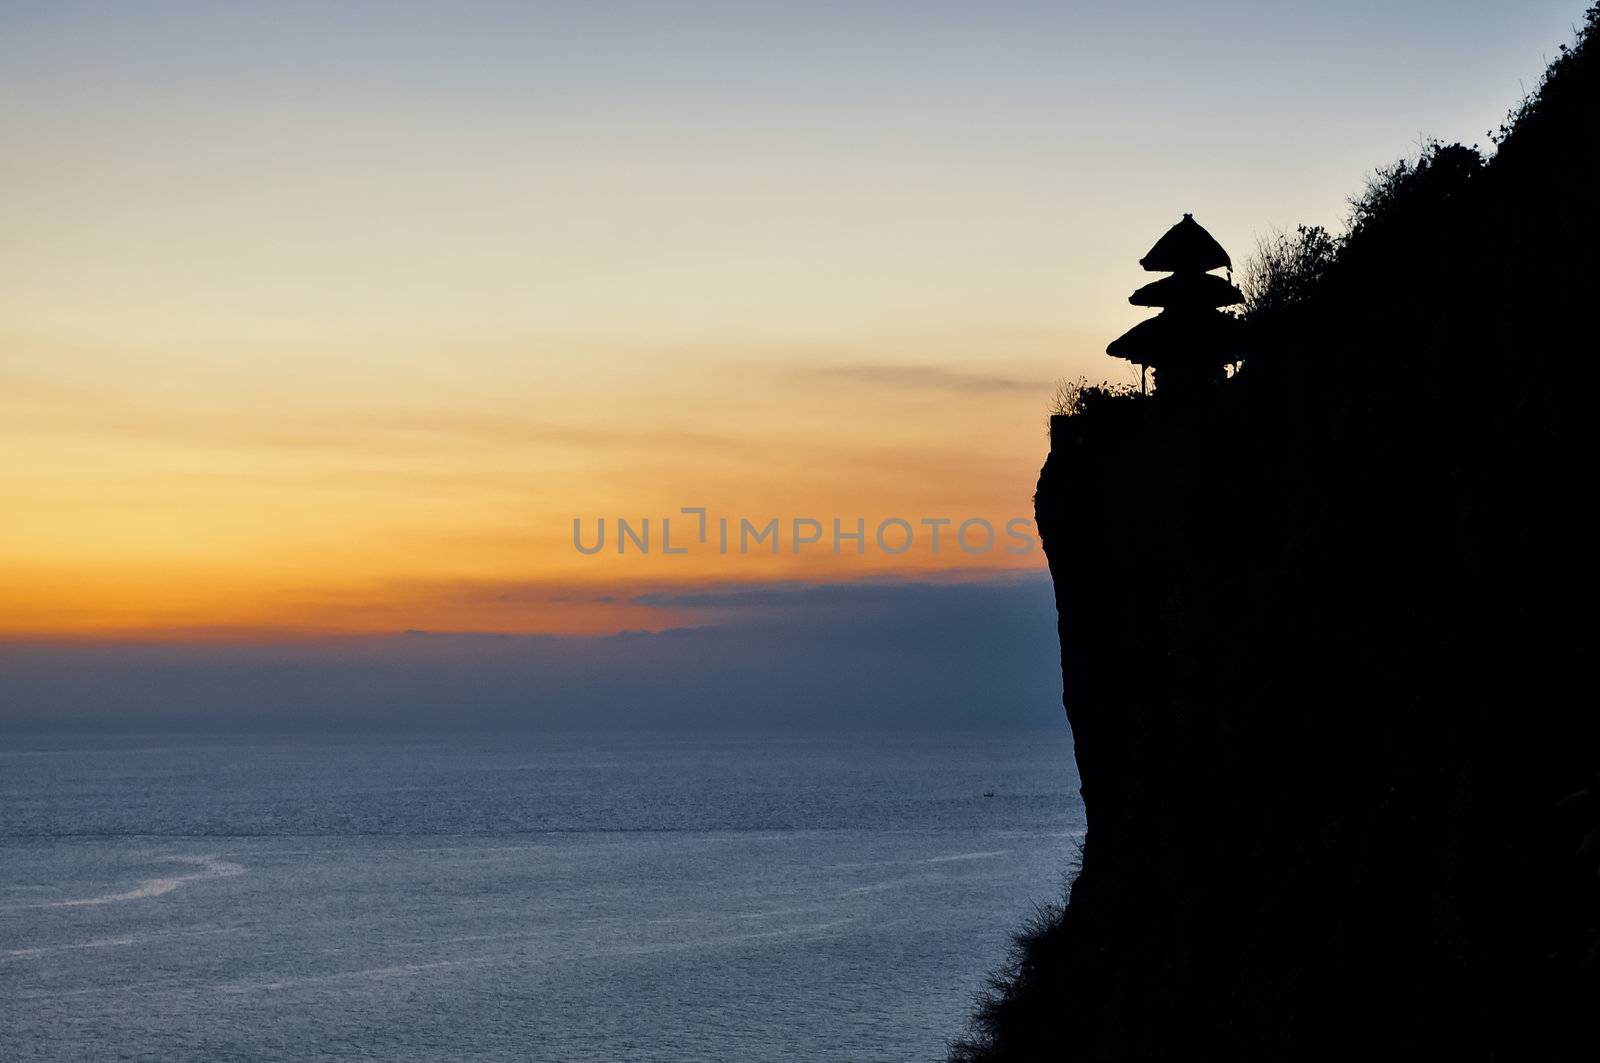 Uluwatu temple sunset, Bali, Indonesia by martinm303